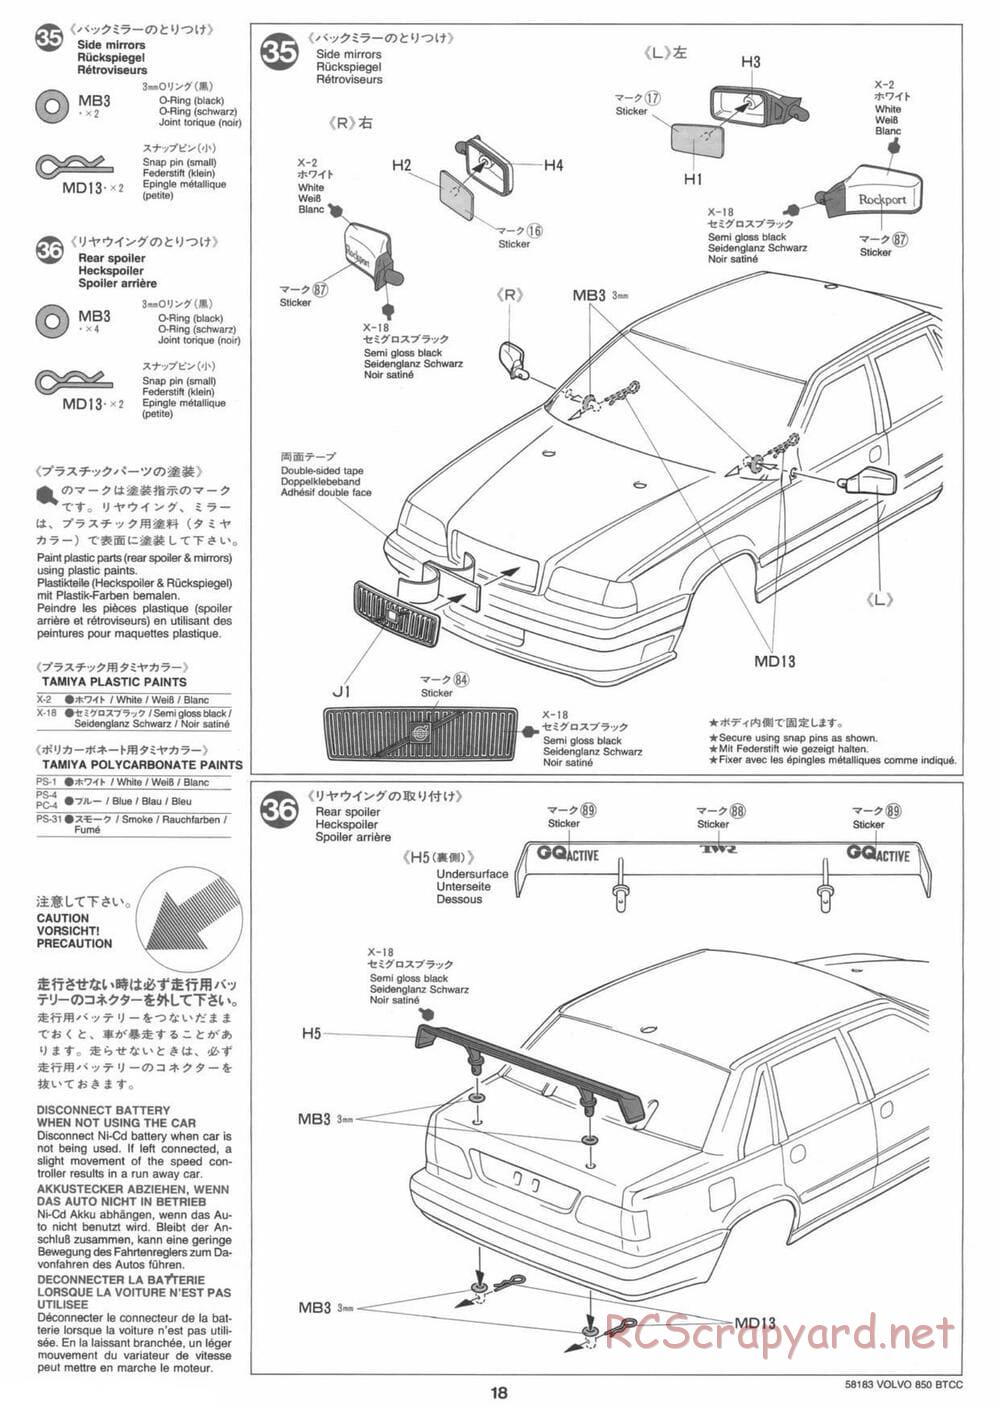 Tamiya - Volvo 850 BTCC - FF-01 Chassis - Manual - Page 18